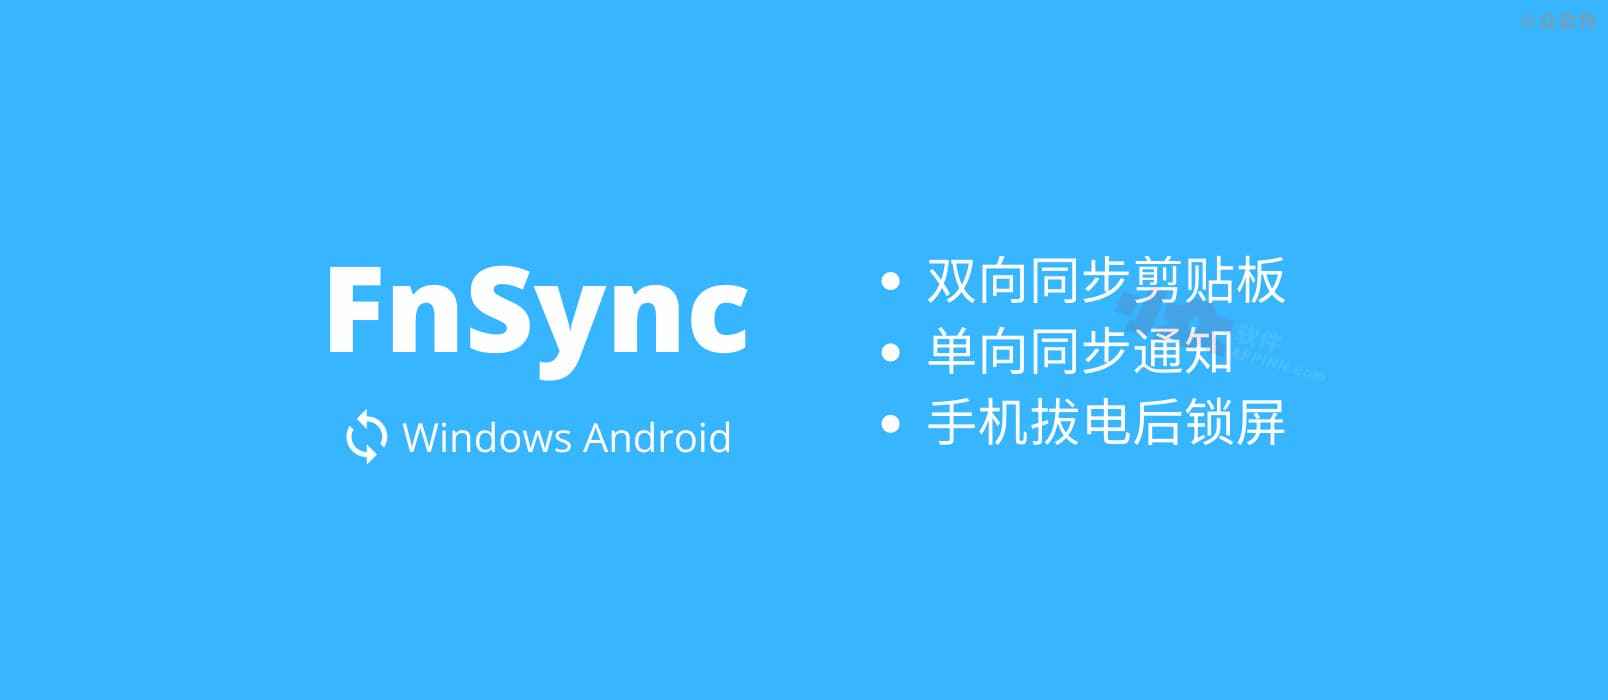 FnSync – 同步 Android 通知到 Windows，双向同步剪贴板，还能拔掉手机电源后锁定电脑